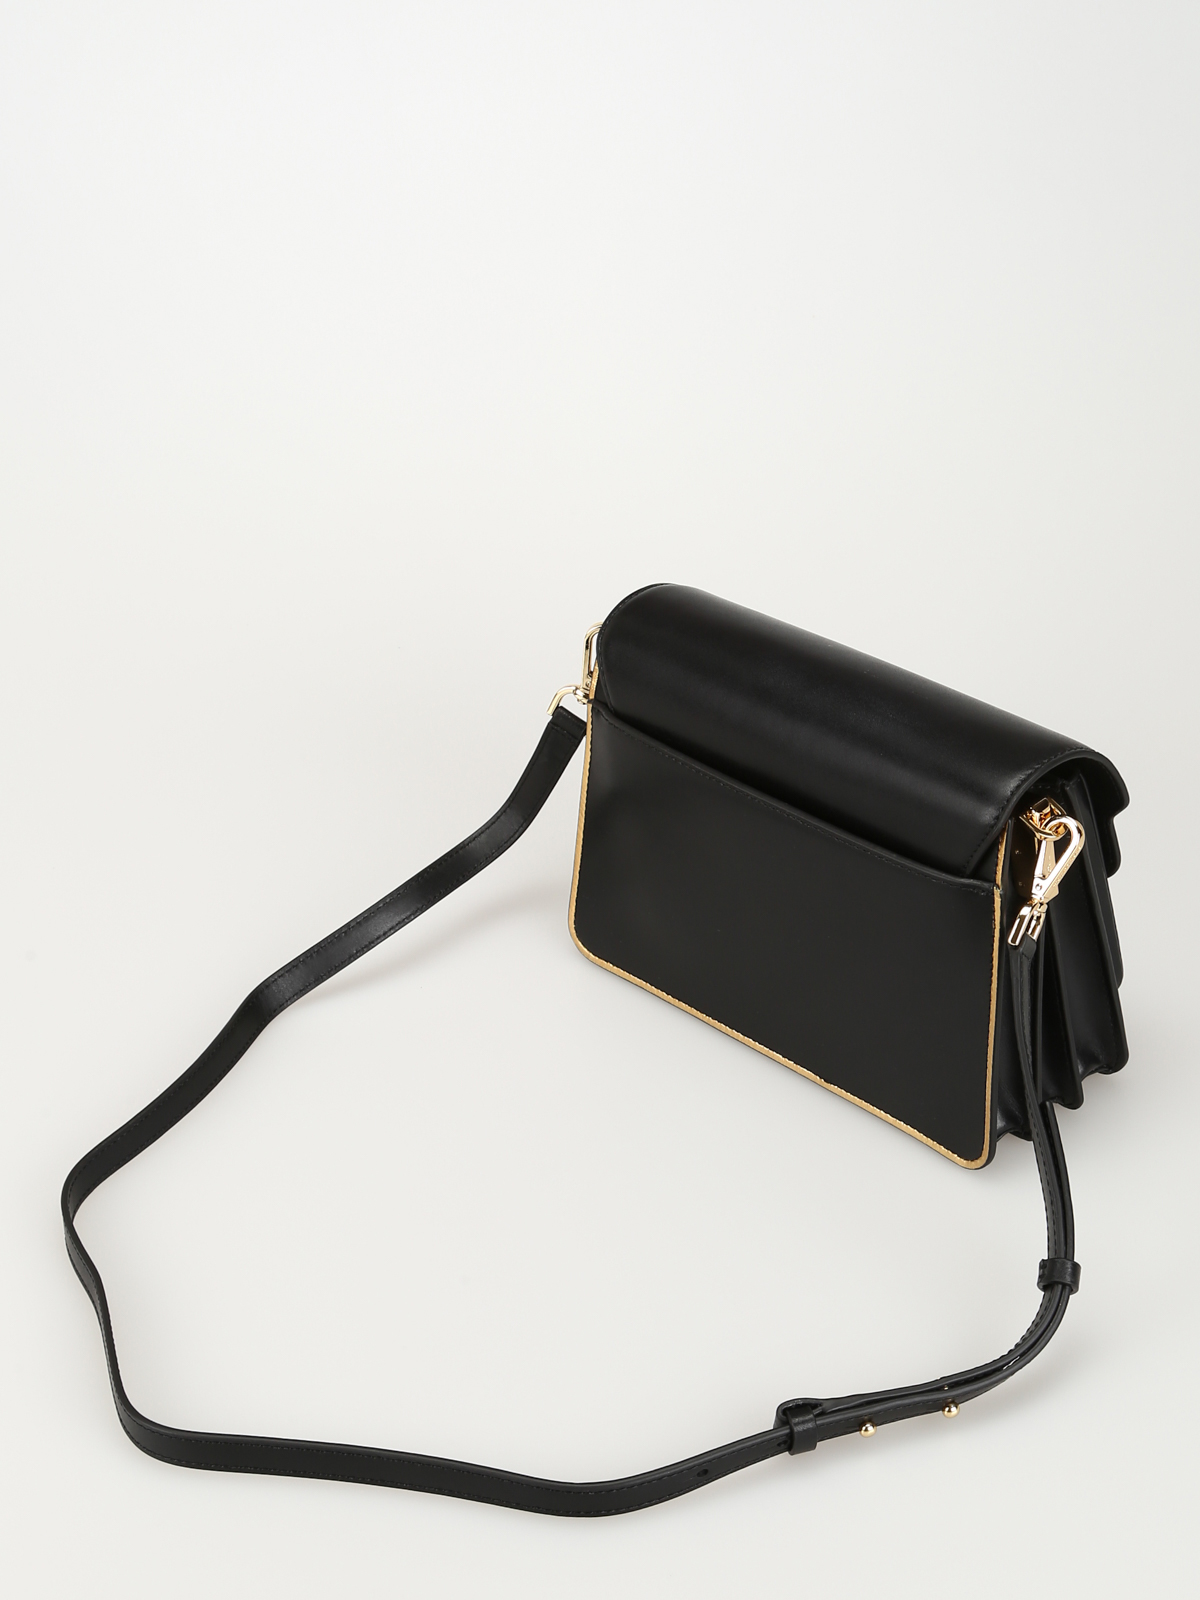 Tatiana L black smooth leather bag 